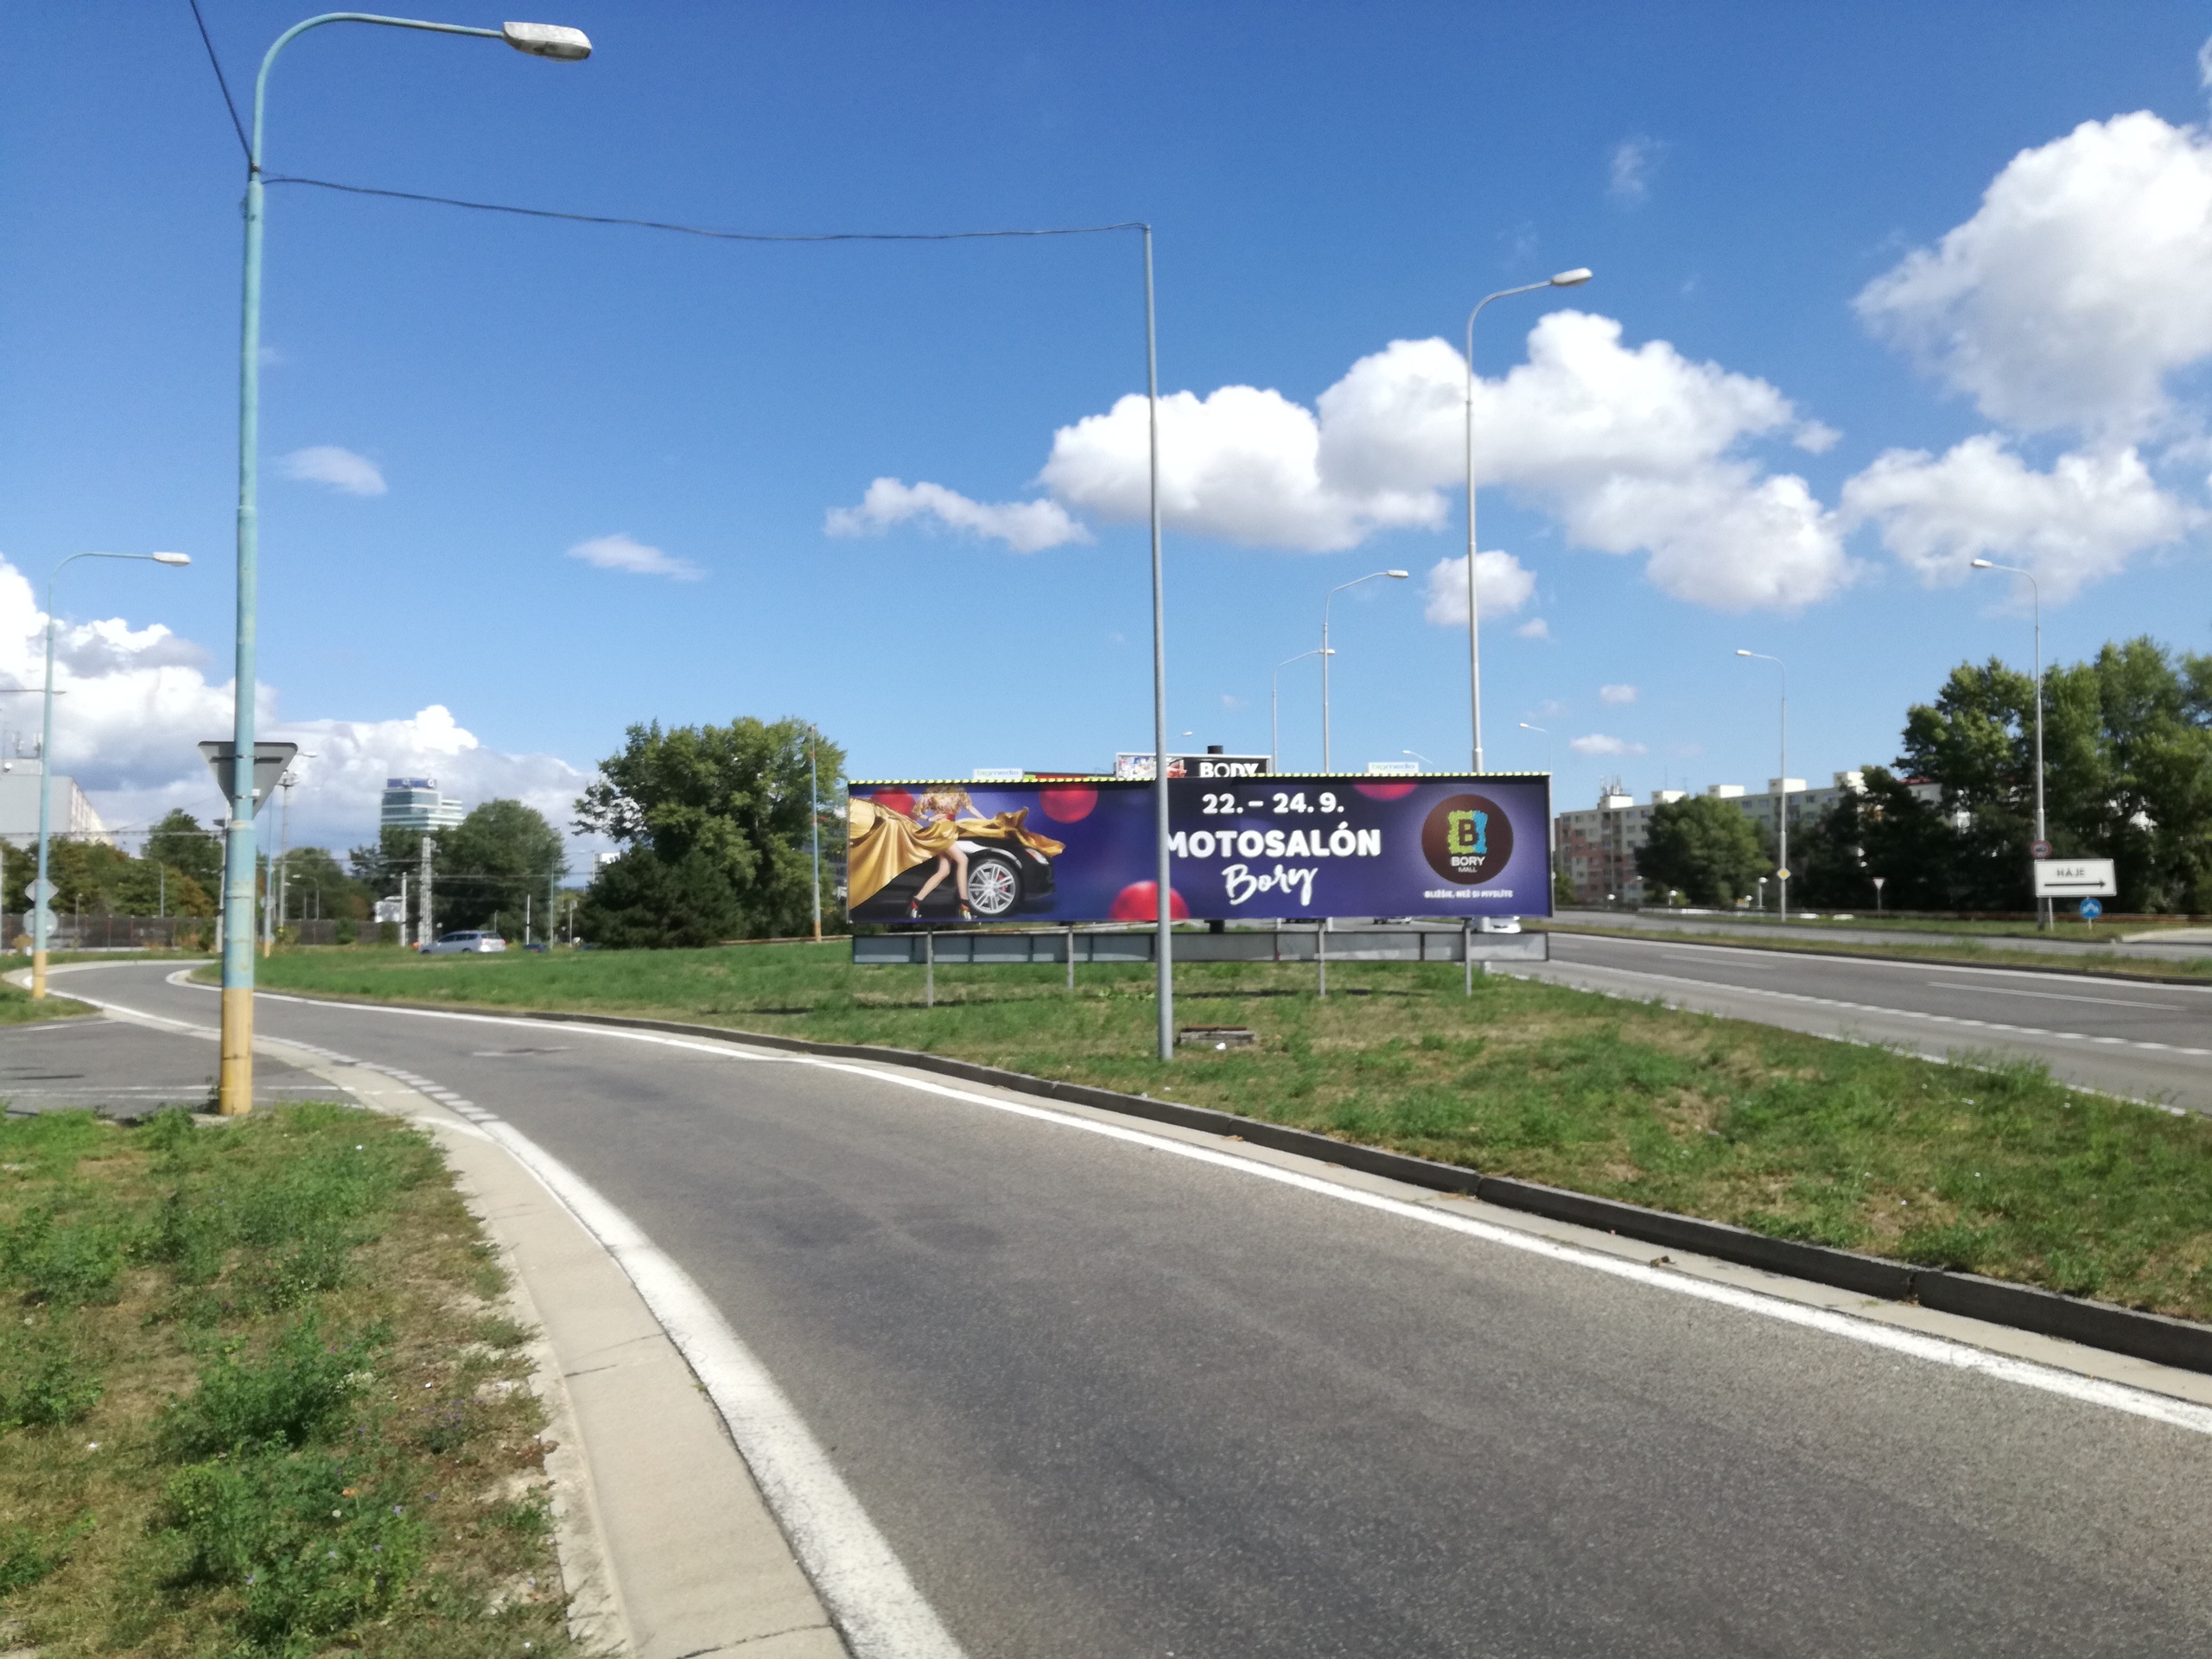 Nevhodne umiestnený billboard, Petržalka, Bratislava | Odkazprestarostu.sk